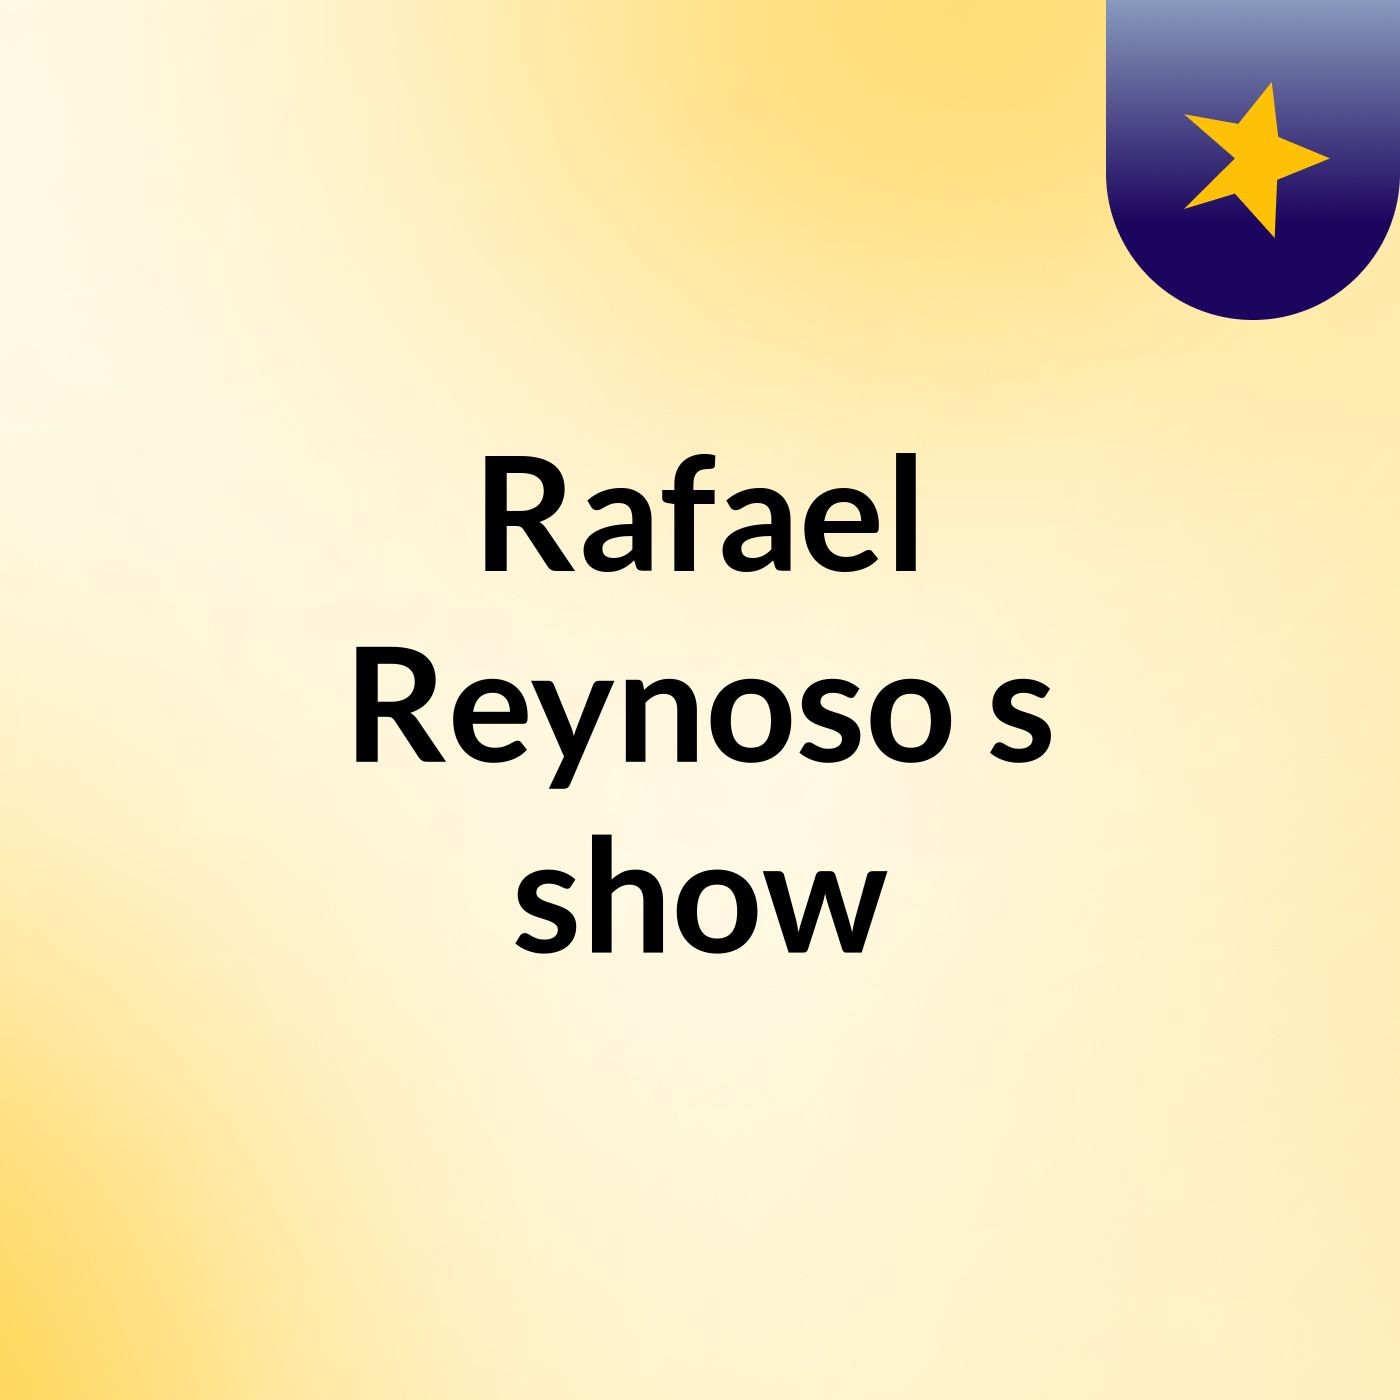 Episode 5 - Rafael Reynoso's show